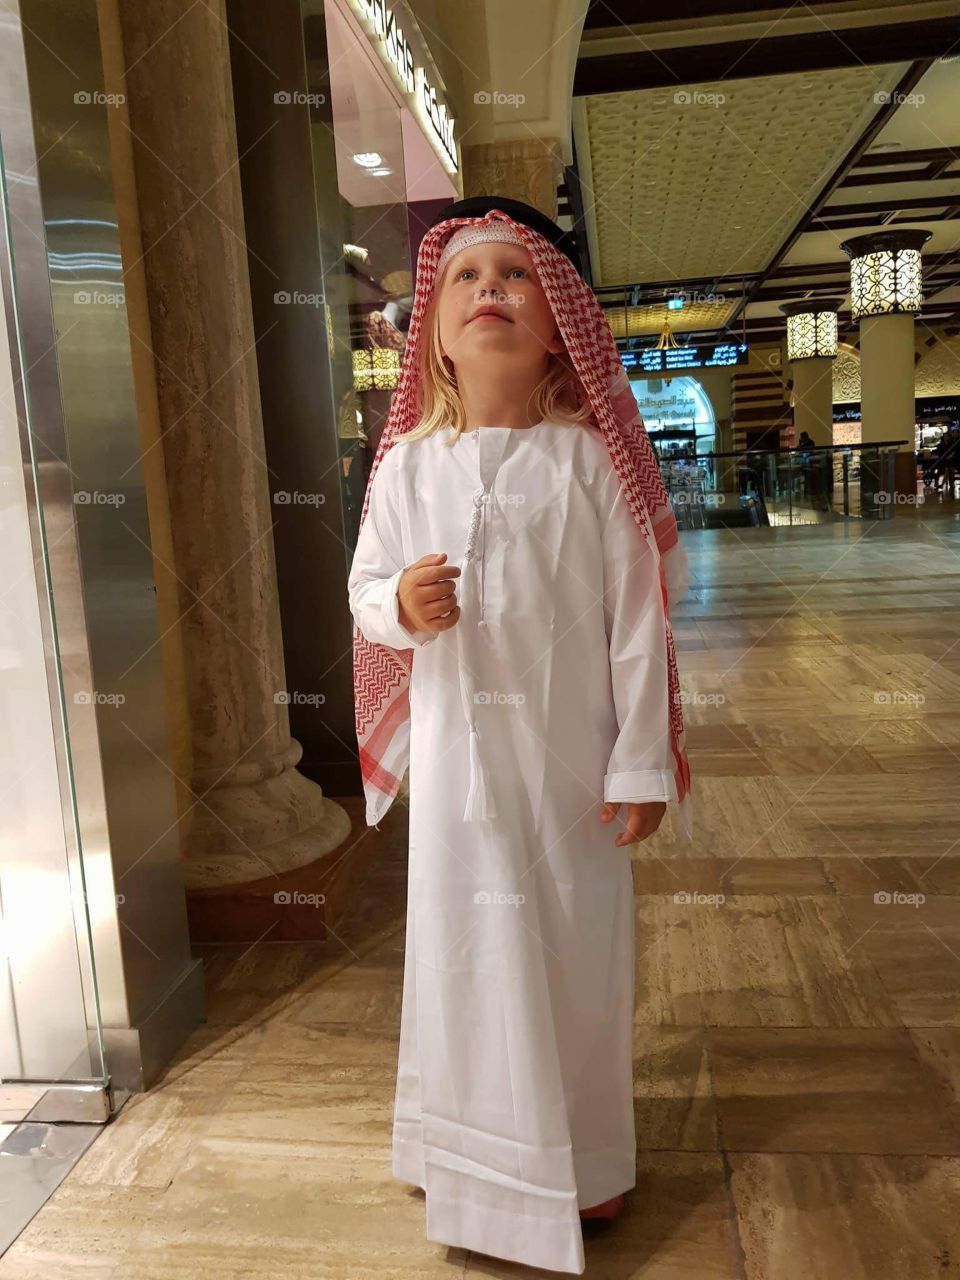 Dubai Mall - My little Sheikh 